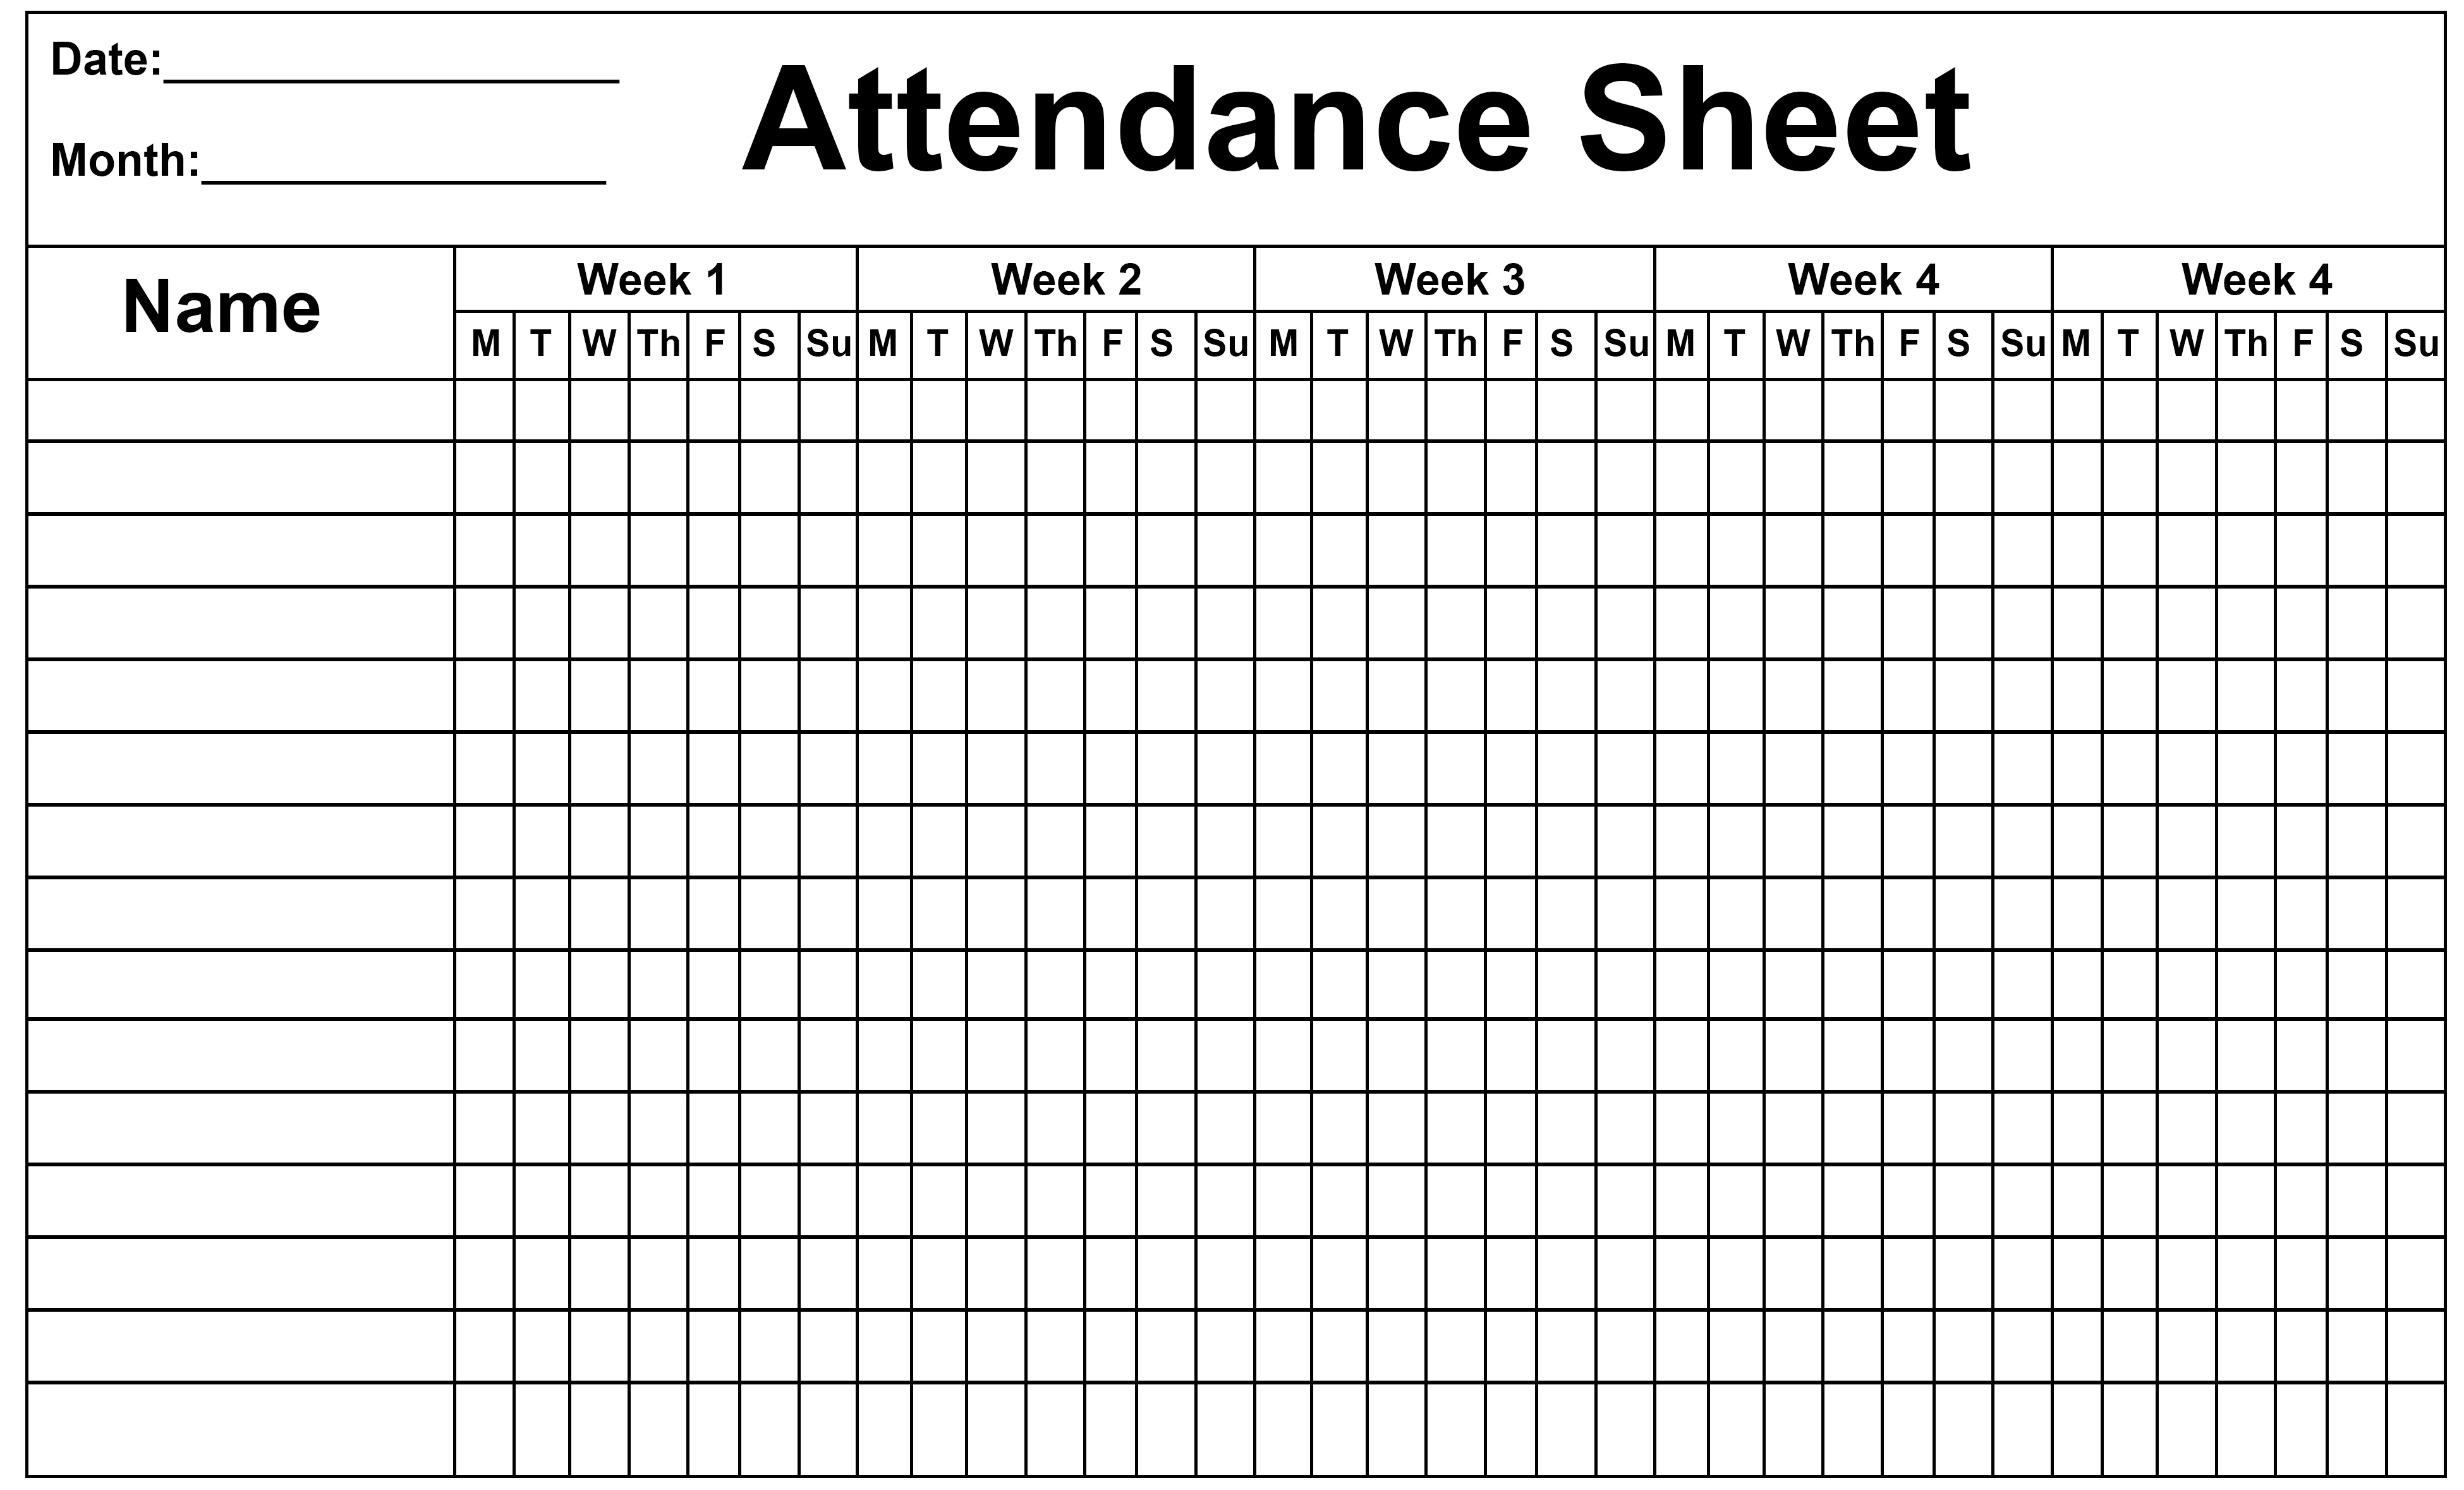 Employee Attendance Tracker Sheet 2019 | Printable Calendar Diy-2020 Employee Attendance Calendar Templates